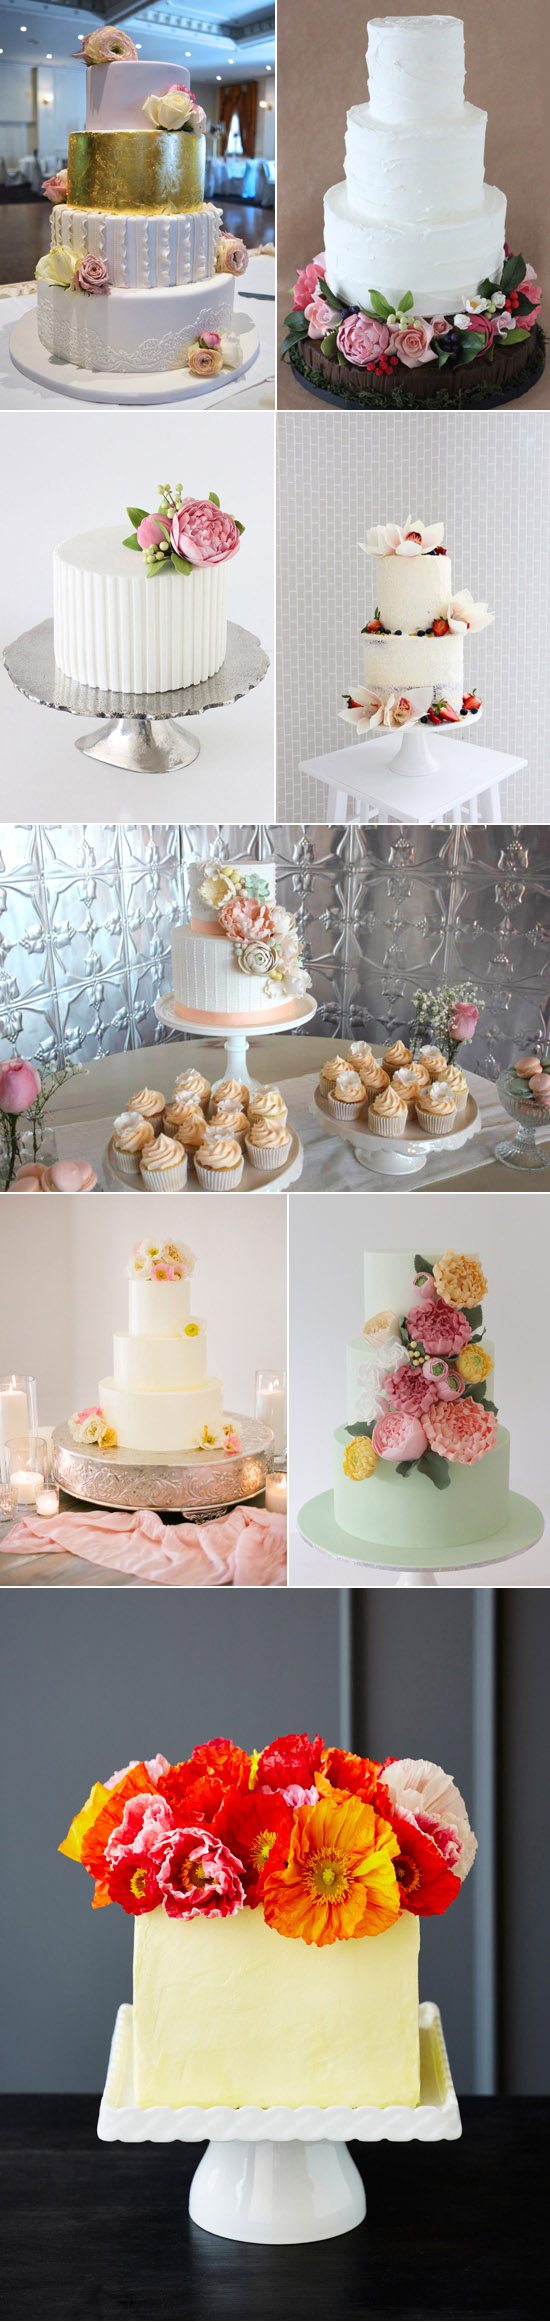 Spring wedding cake ideas